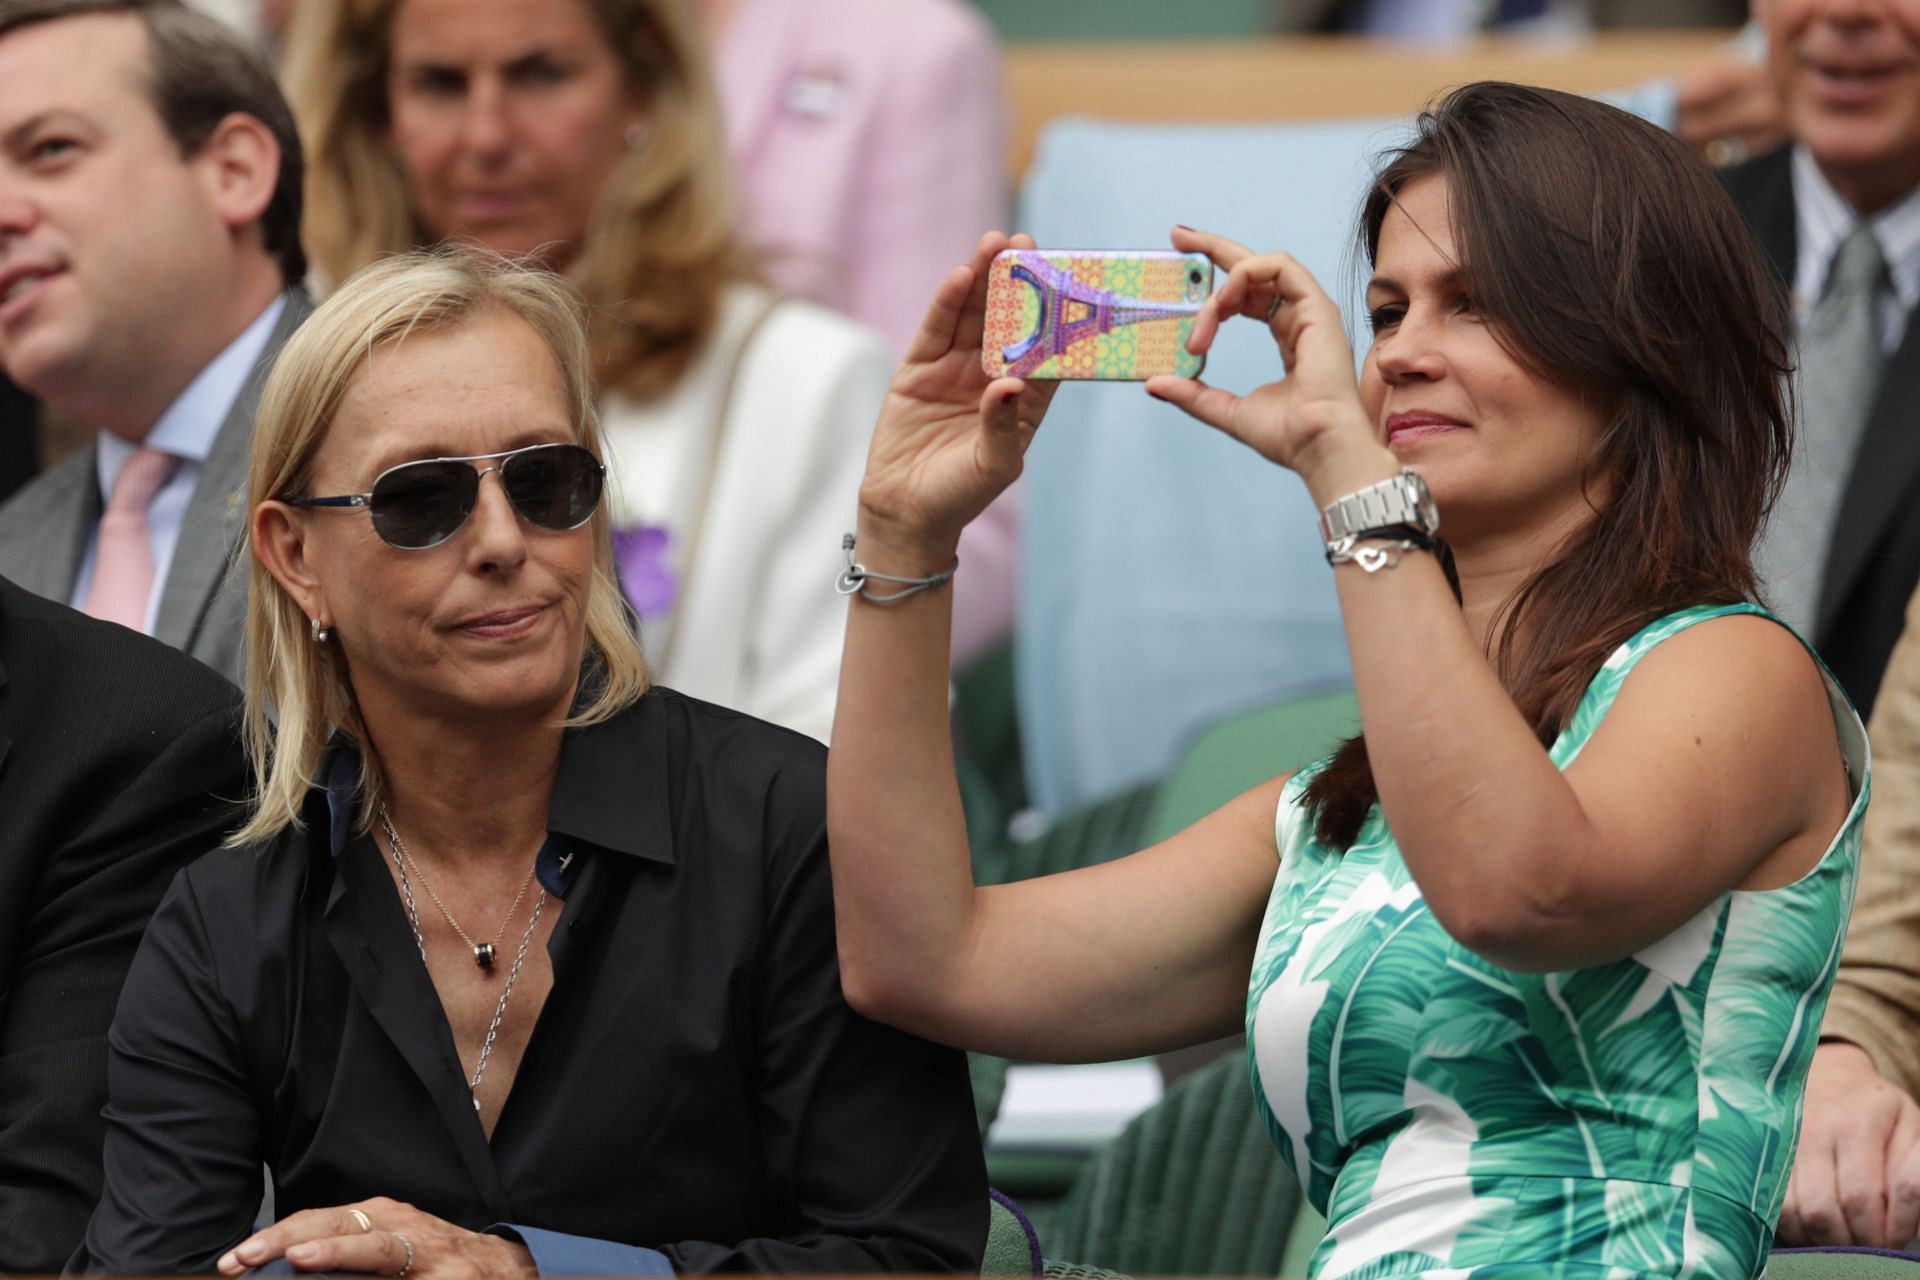 Martina Navratilova pictured with her wife at Wimbledon 2016.